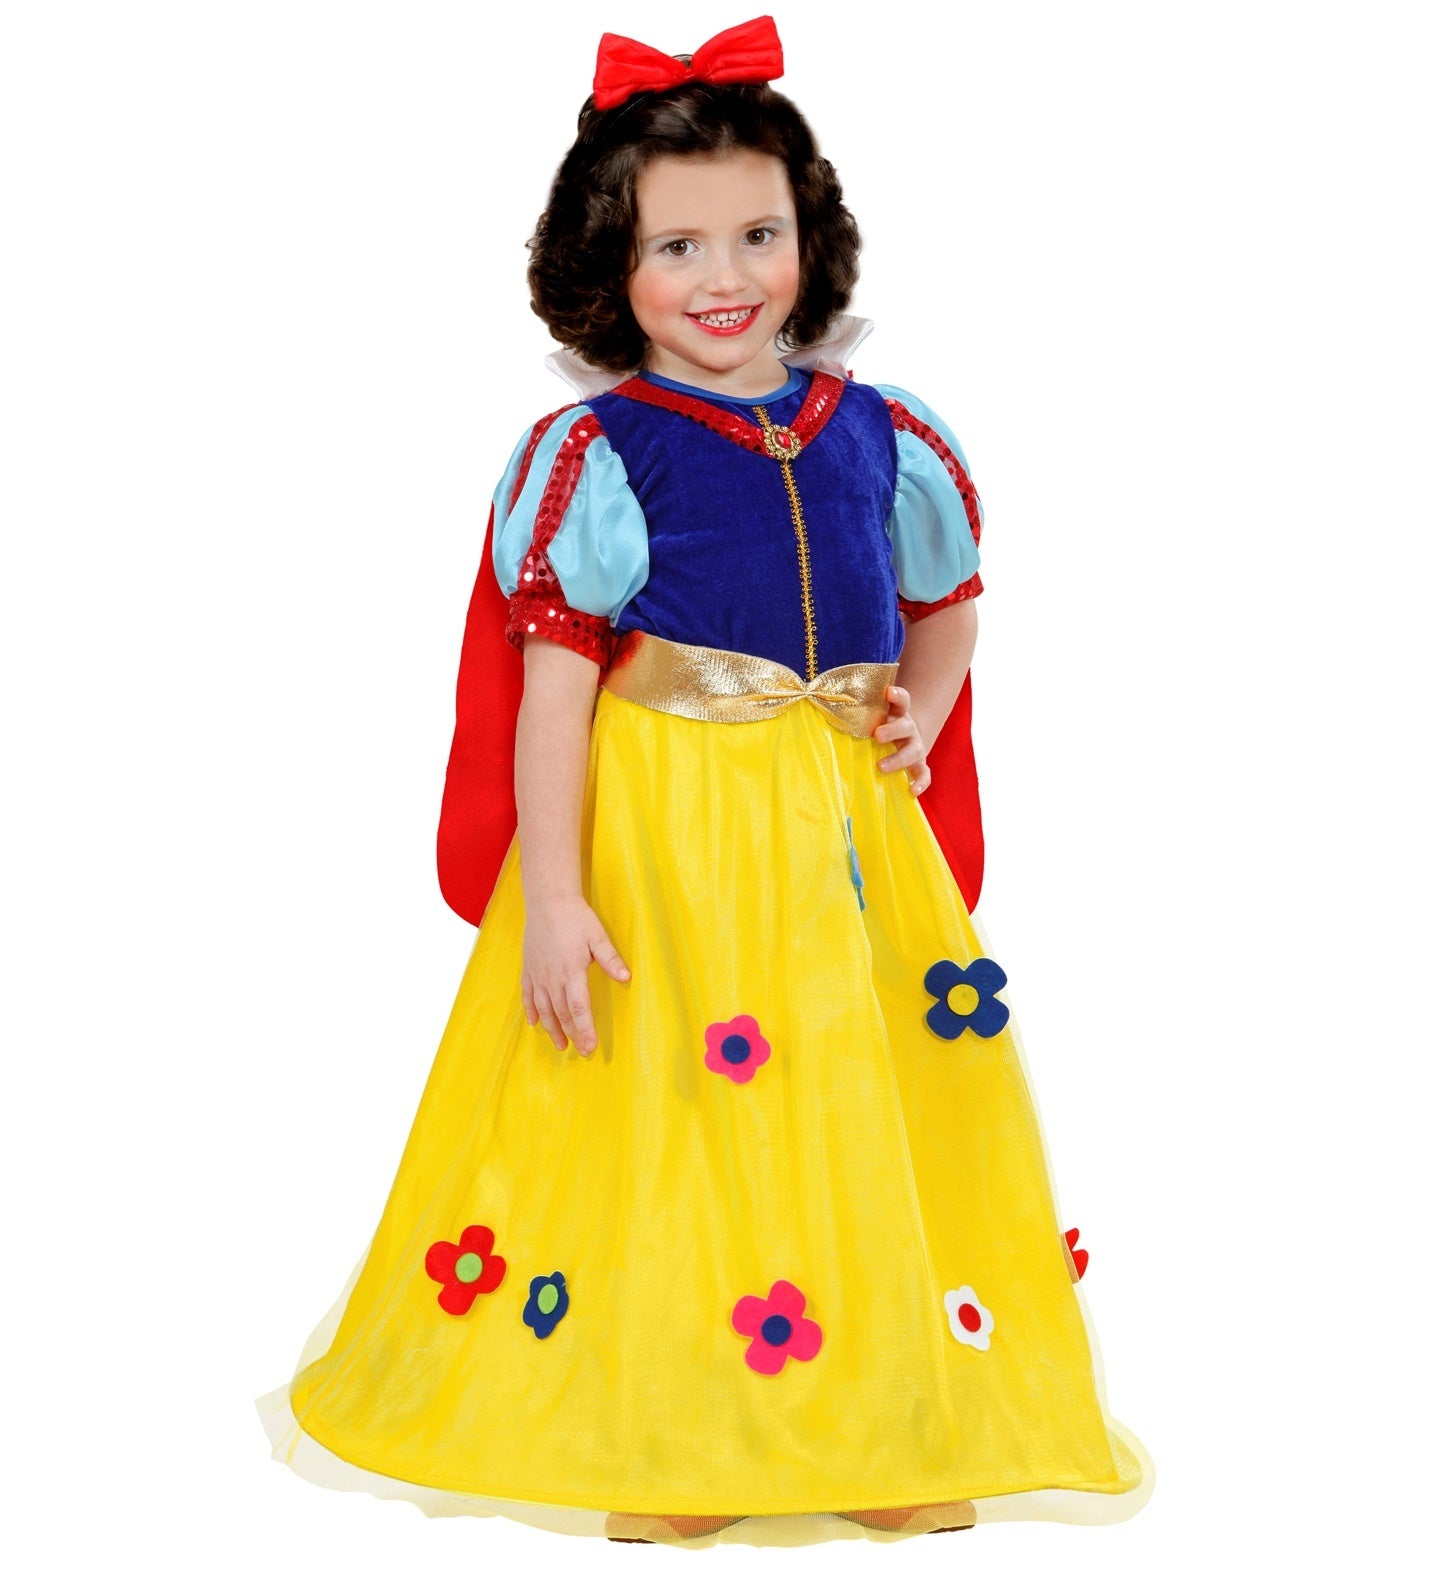 Widmann - Sneeuwwitje Kostuum - Sprookjesboek Prinses Sneeuwwitje Met Bloemen - Meisje - blauw,geel - Maat 104 - Carnavalskleding - Verkleedkleding